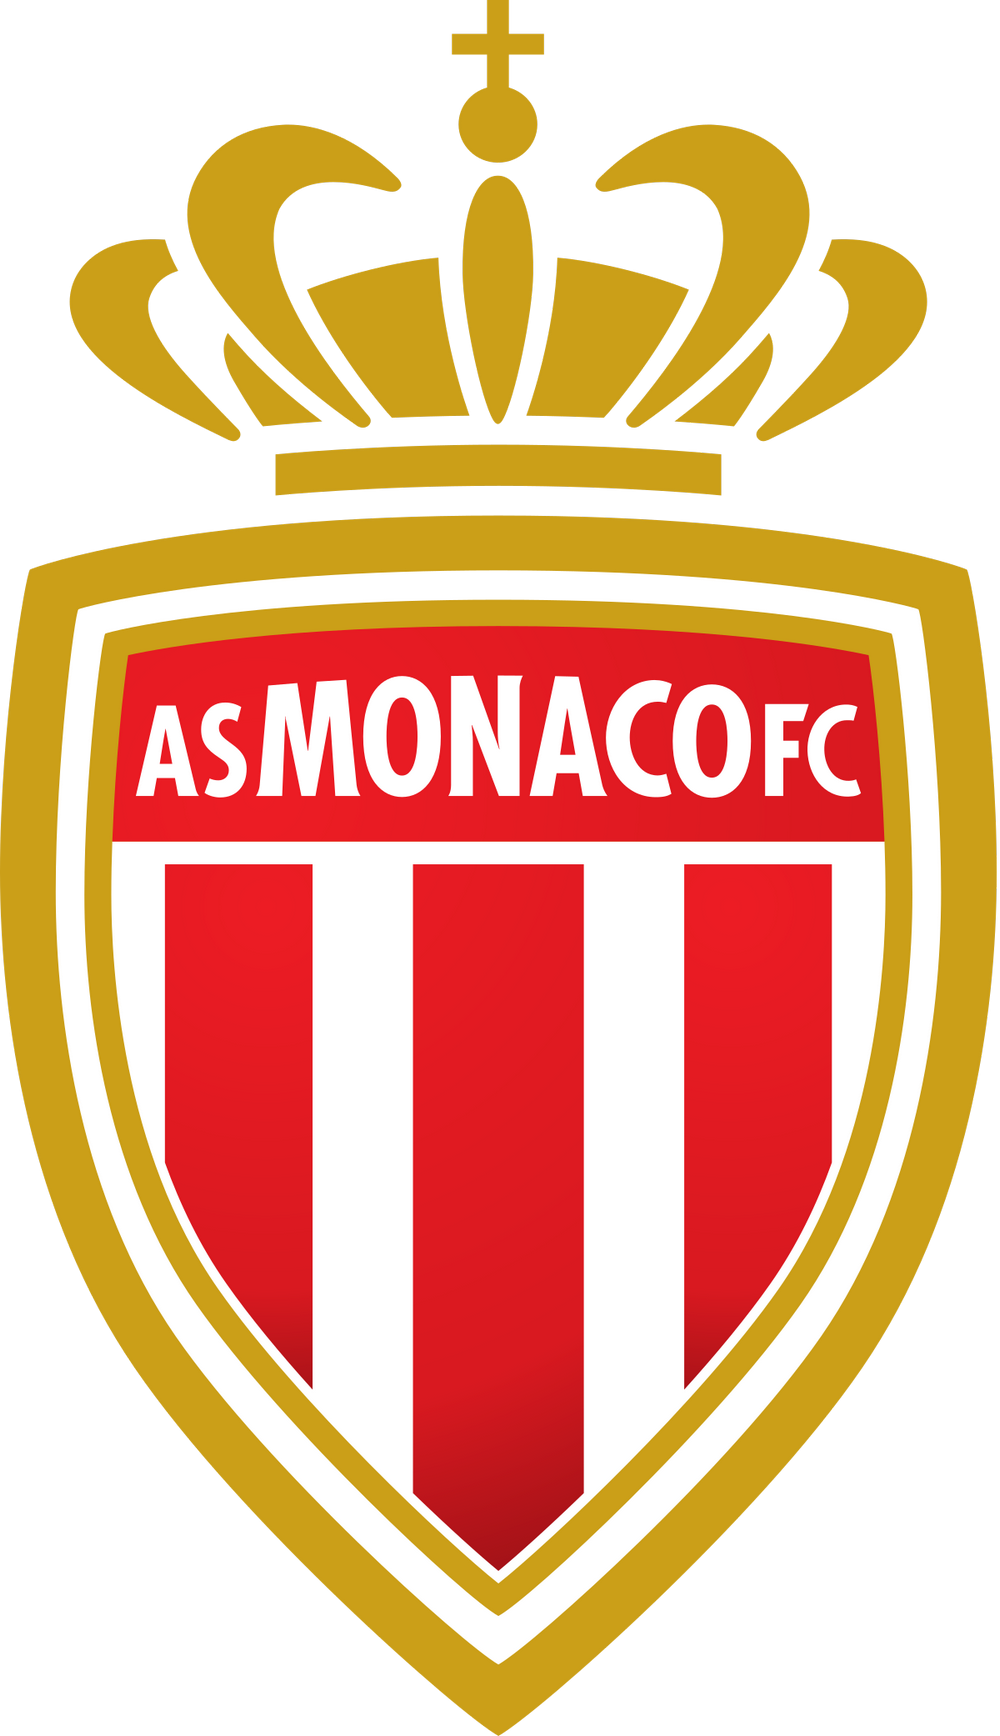 AS Monaco football club crest